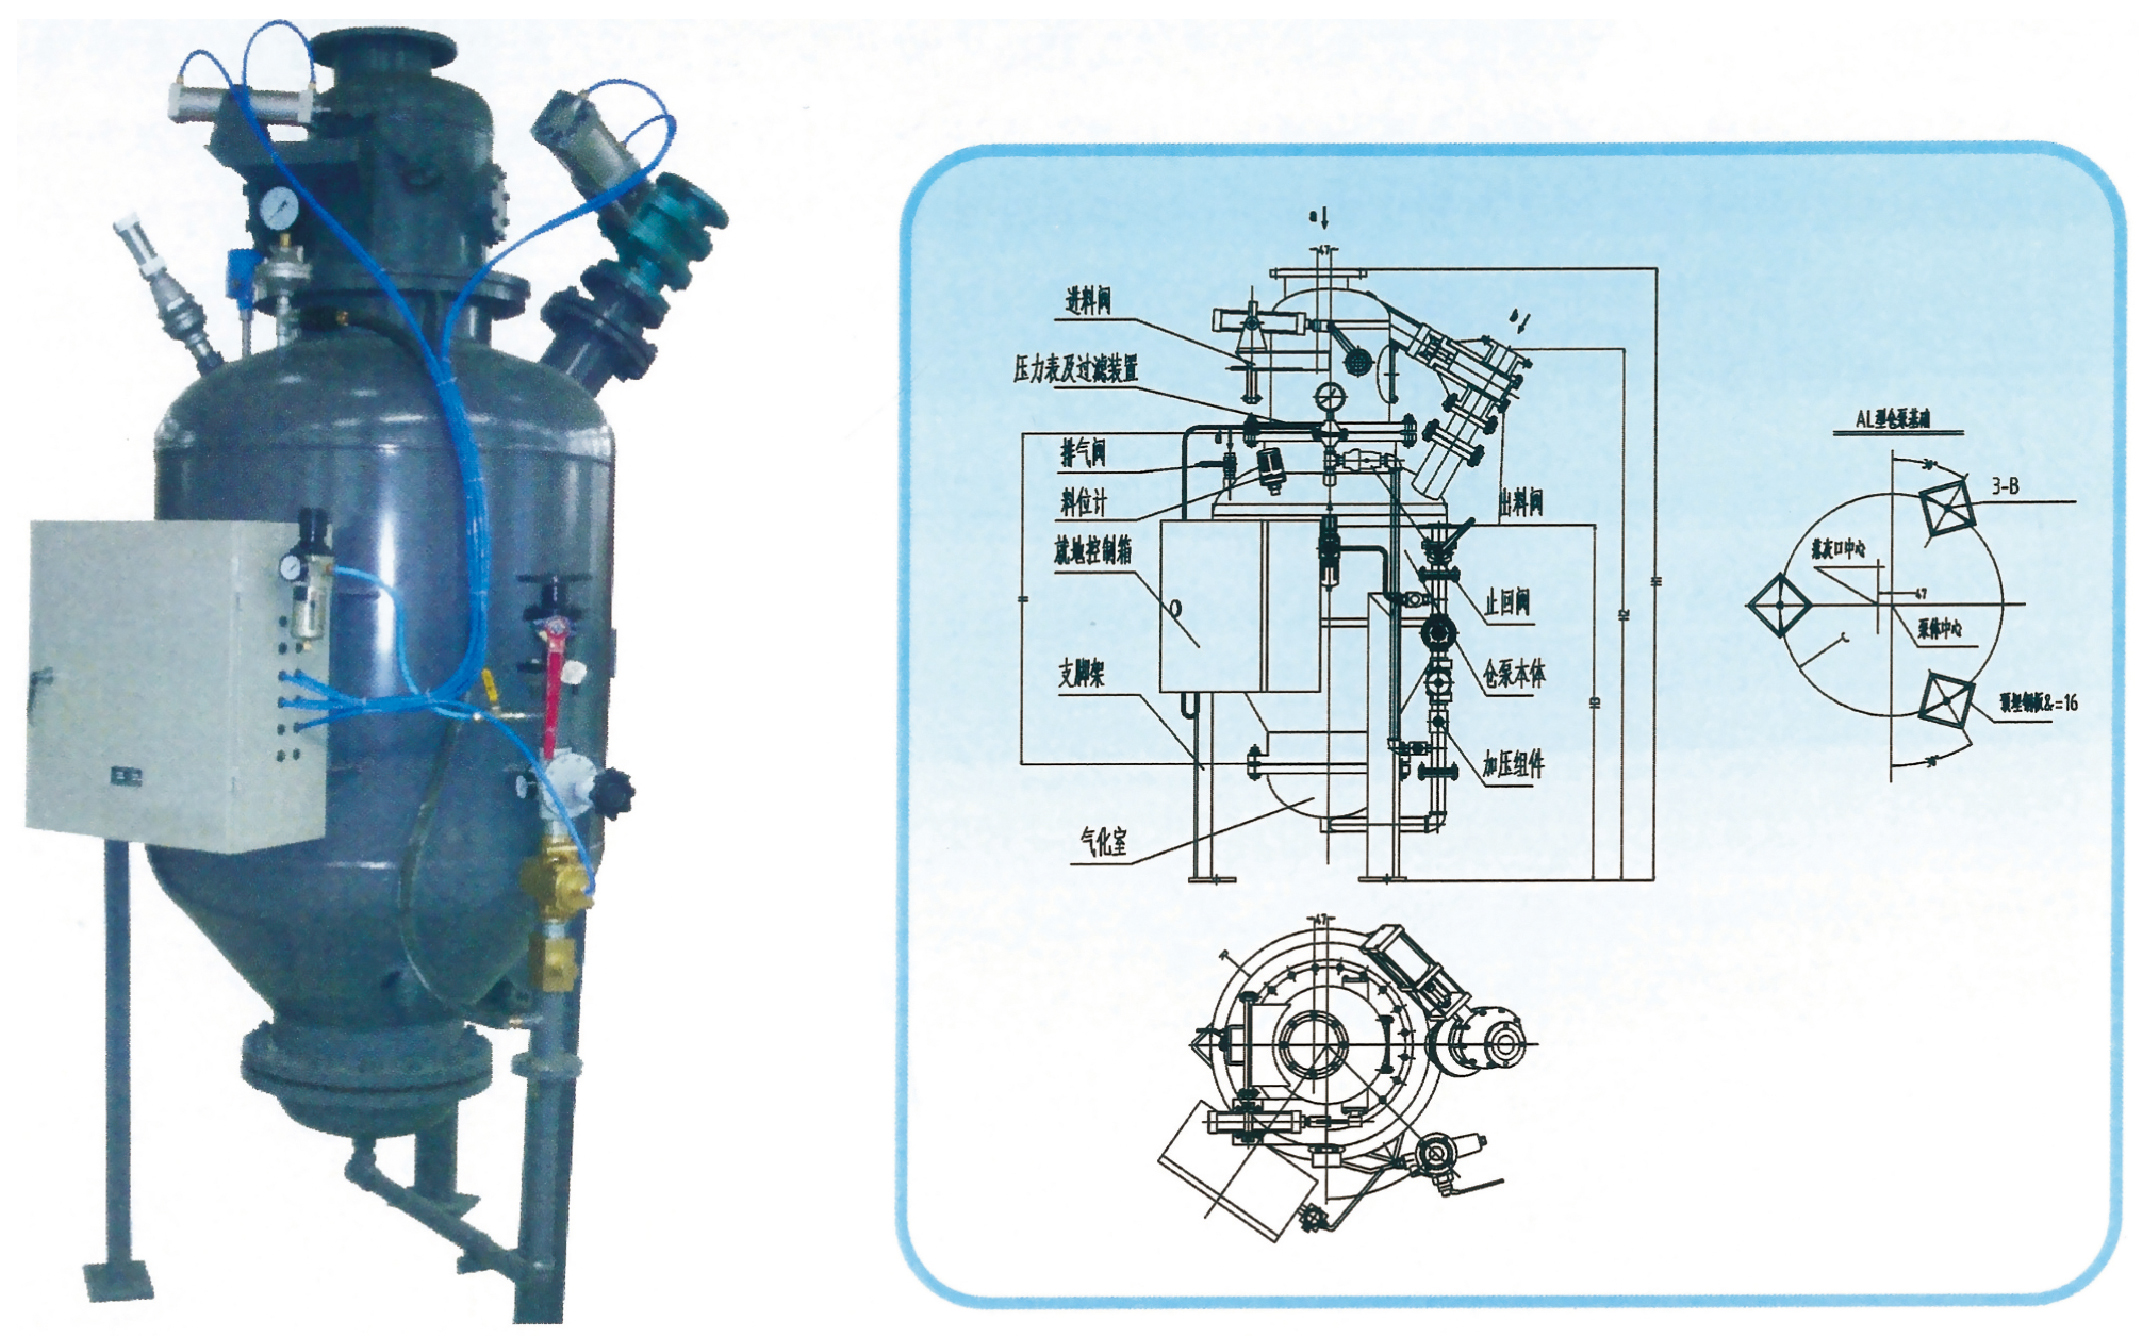 AL型浓相气力输送泵(图1)